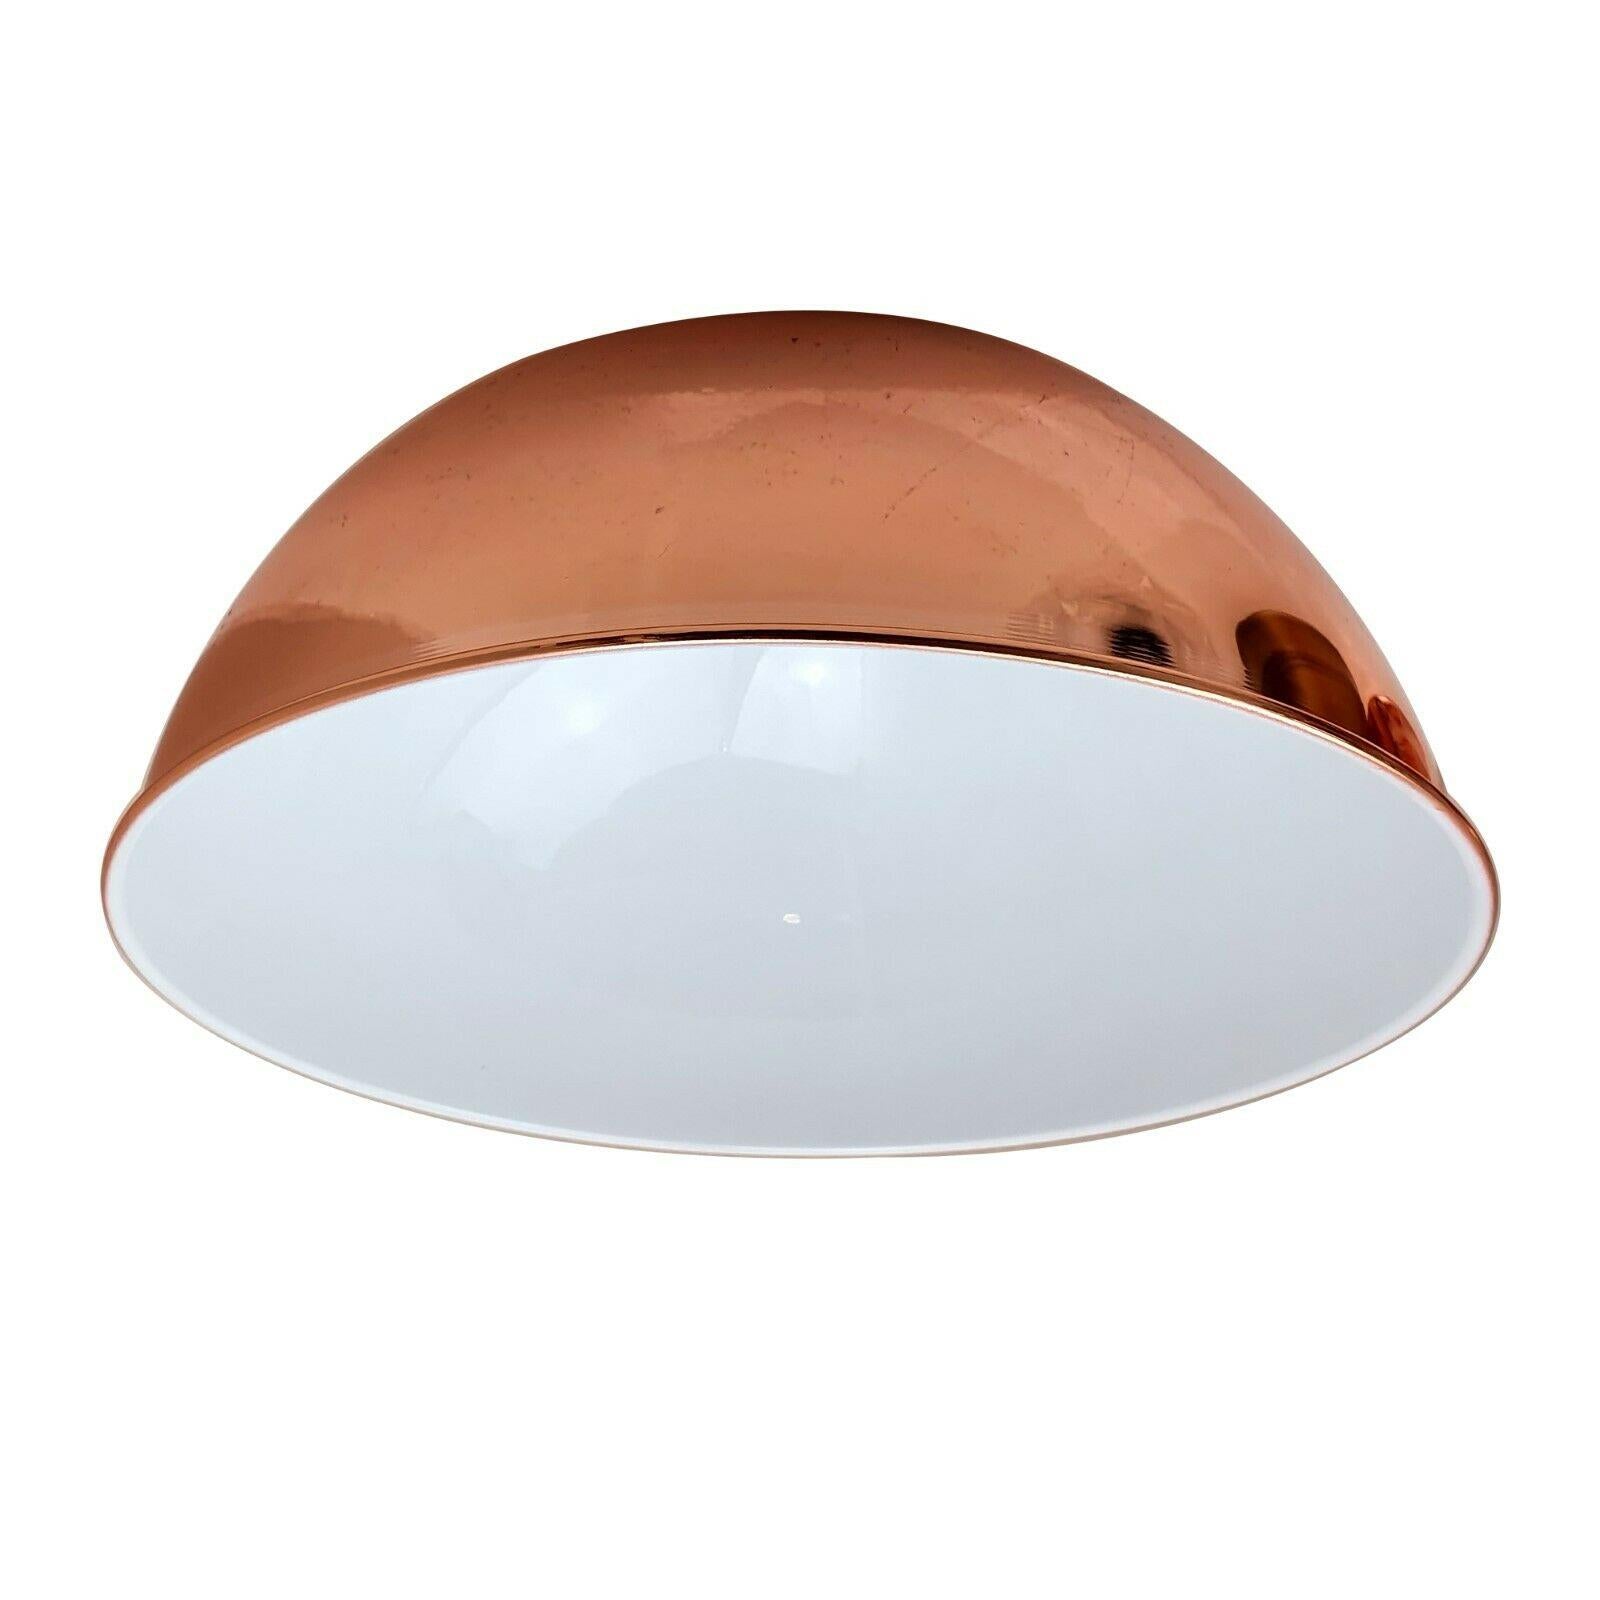 Retro Dome Easy Fit Light Shades Modern Ceiling Pendant Lampshades Metal colors~1388 - LEDSone UK Ltd